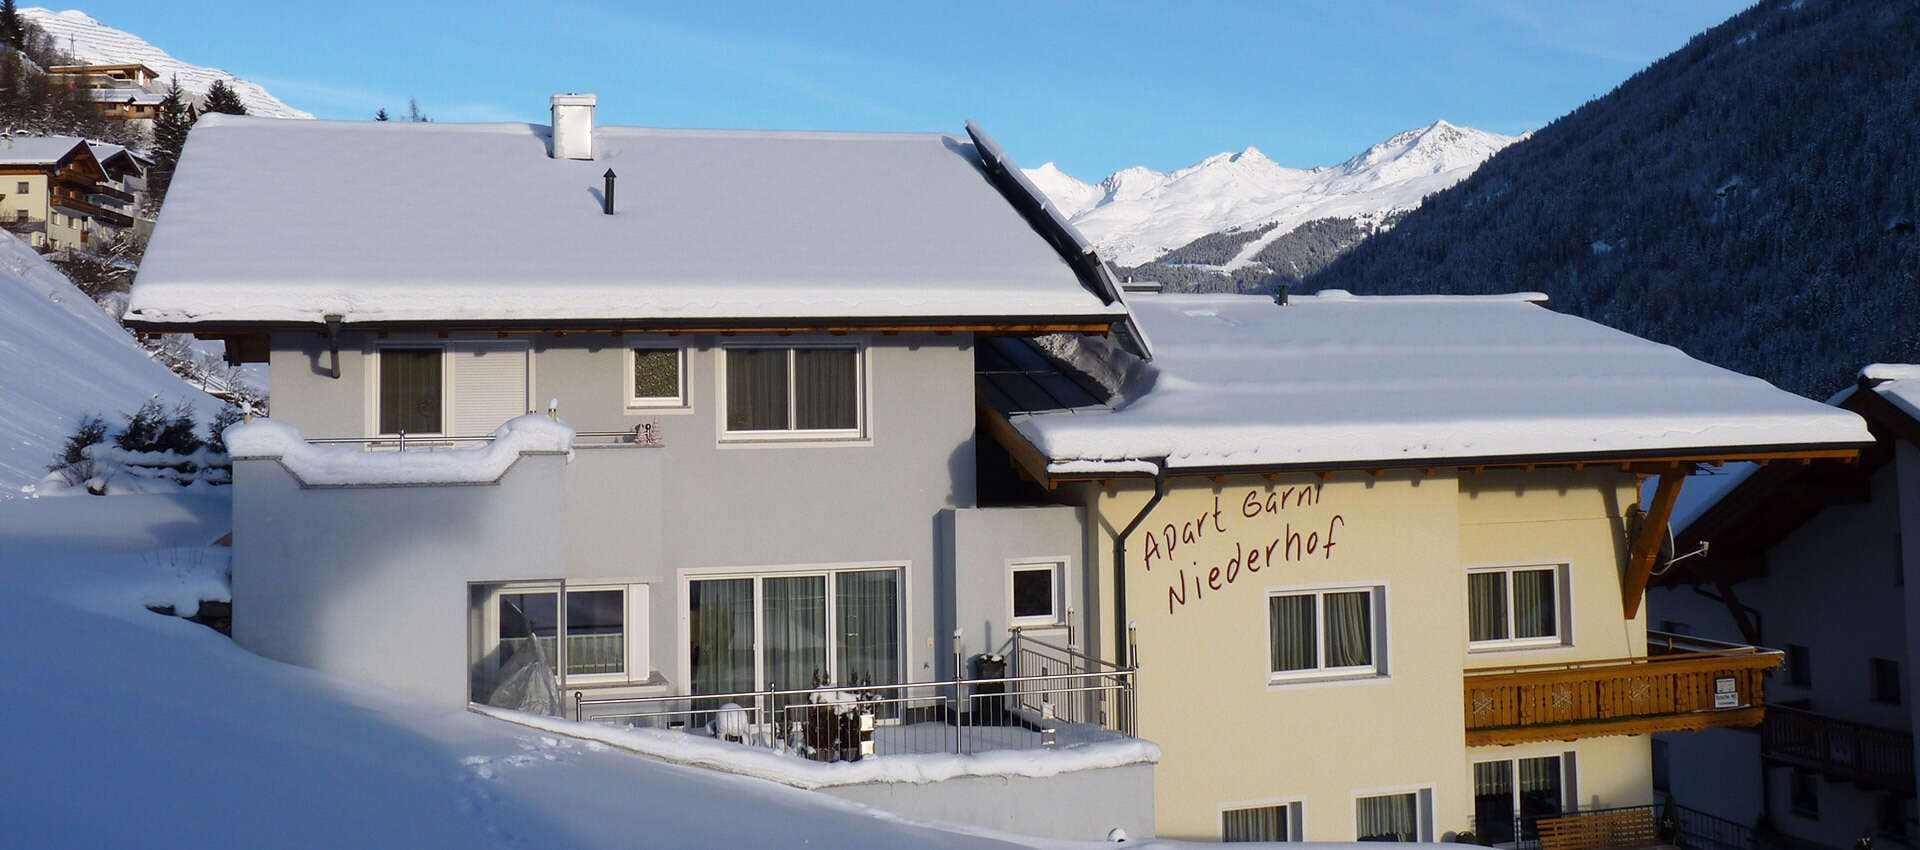 Apart Garni Niederhof holiday house Kappl Tyrol